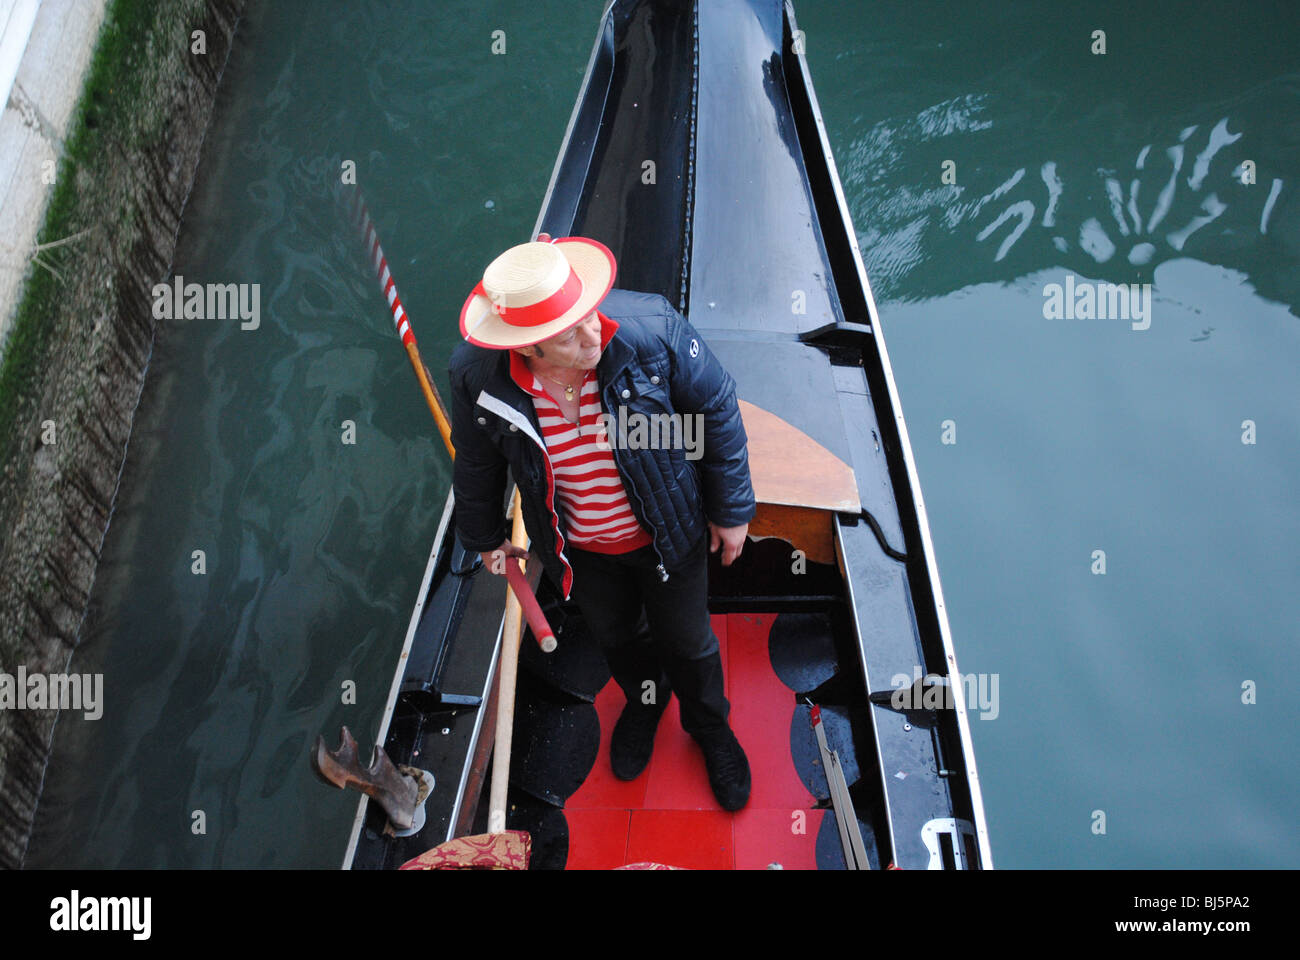 Gondolier passing under a bridge in his gondola, Venice, Italy Stock Photo